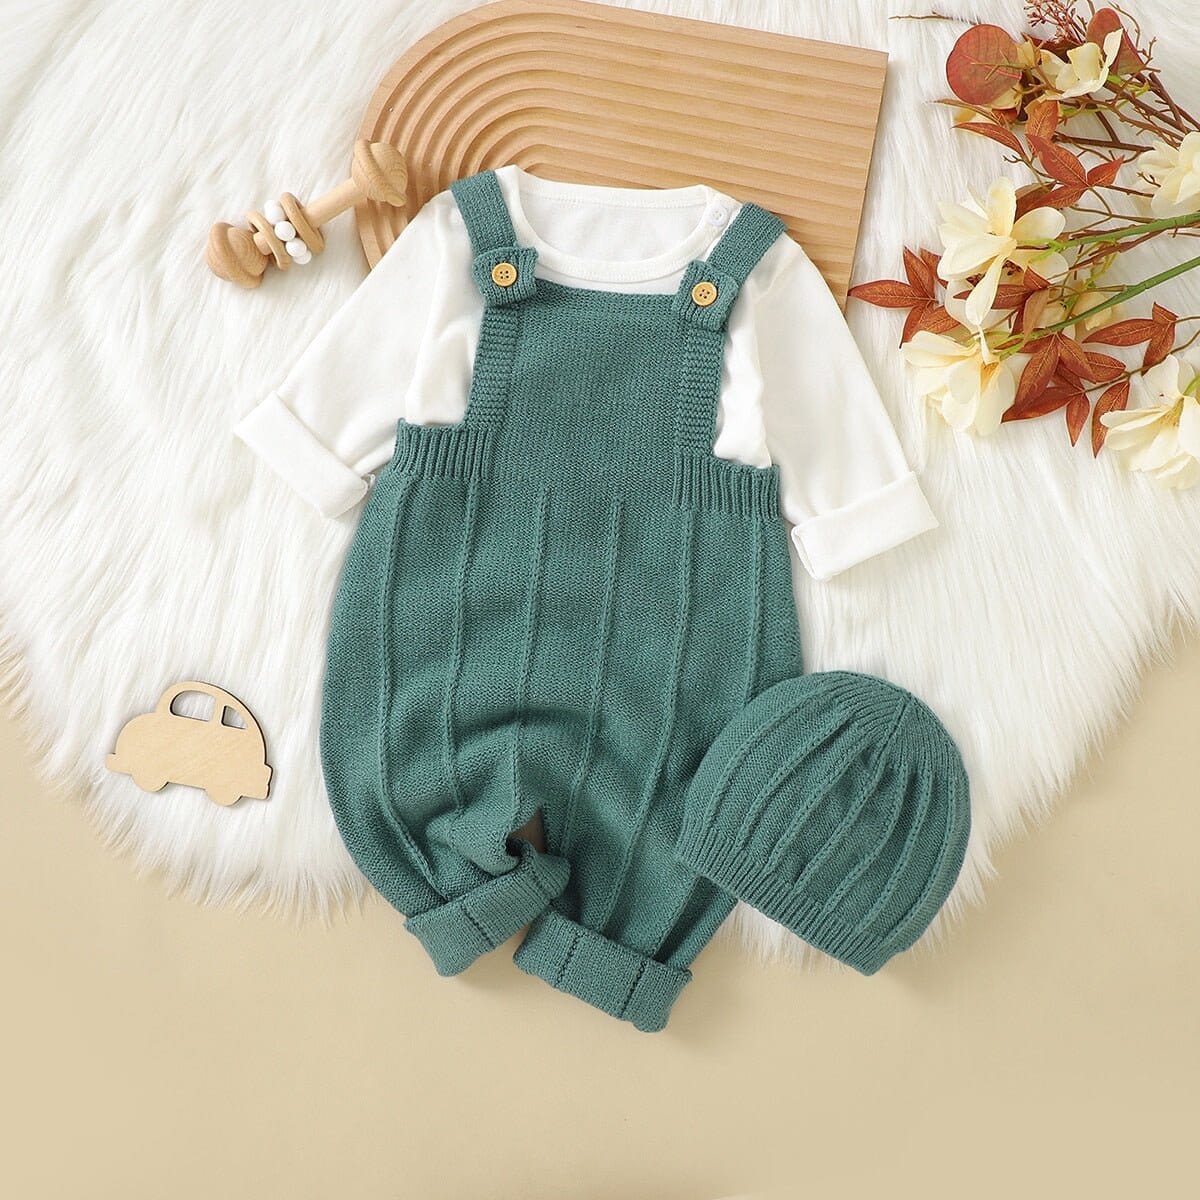 Knitted Newborn Jumpsuit & Hat Set - RoniCorn